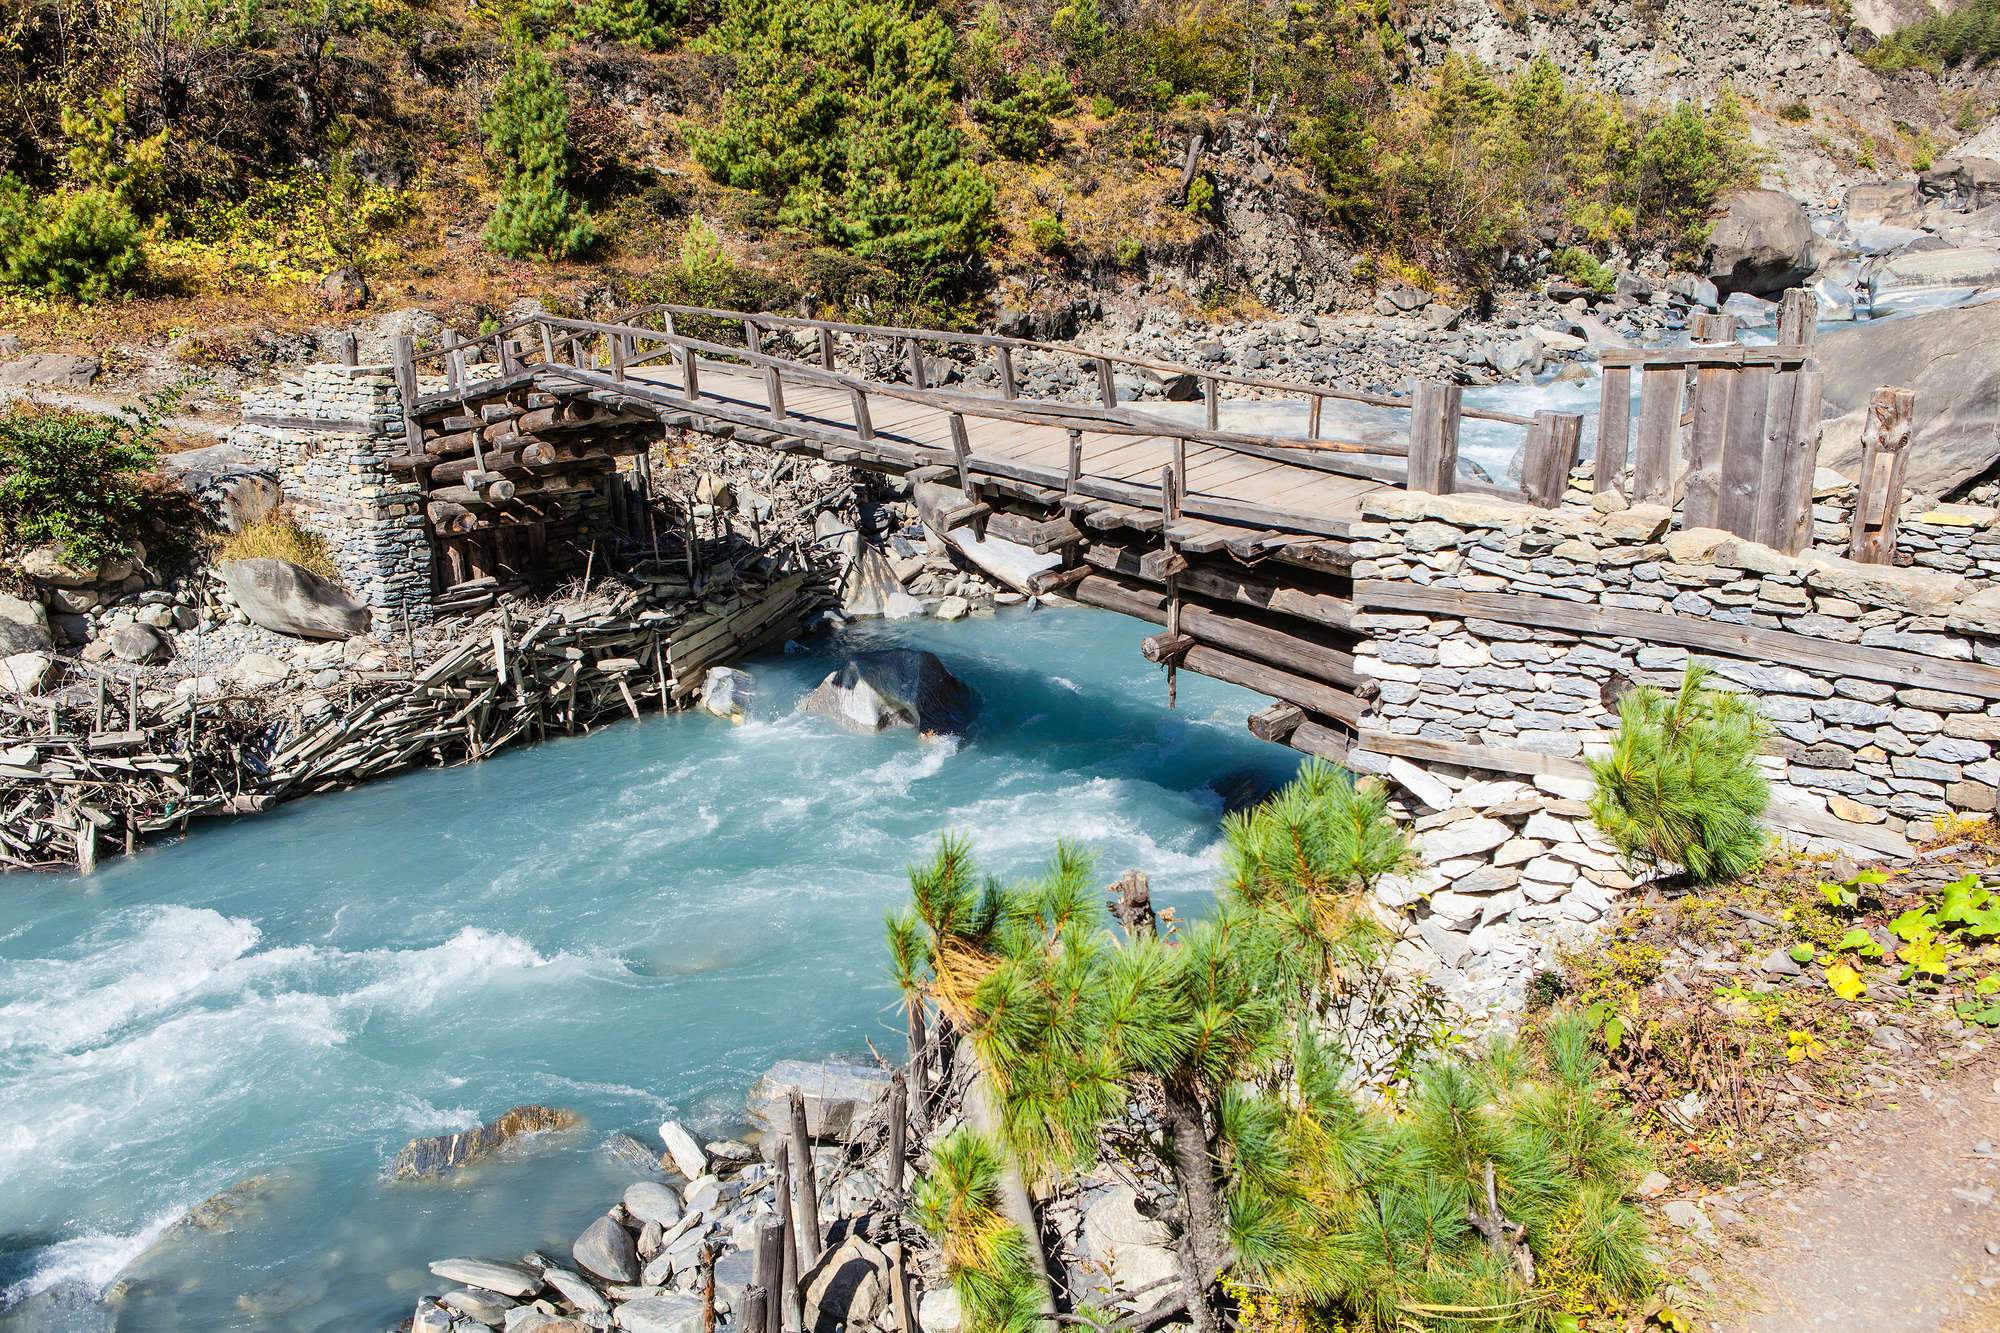             Natur Fototapete Fluss mit alter Holzbrücke auf Perlmutt Glattvlies
        